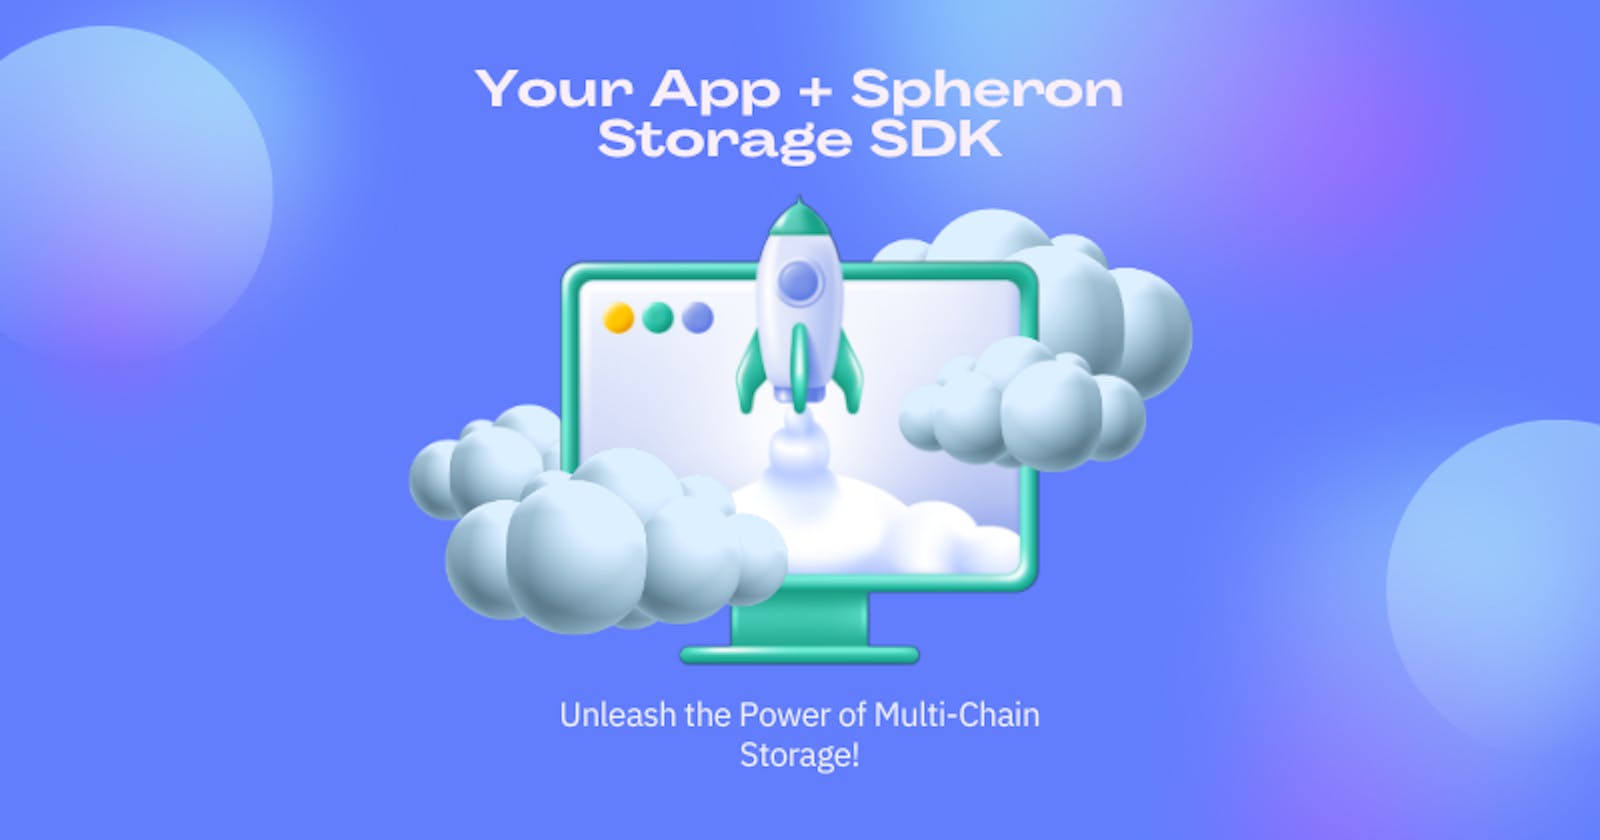 Your App + Spheron Storage SDK: Unleash the Power of Multi-Chain Storage!